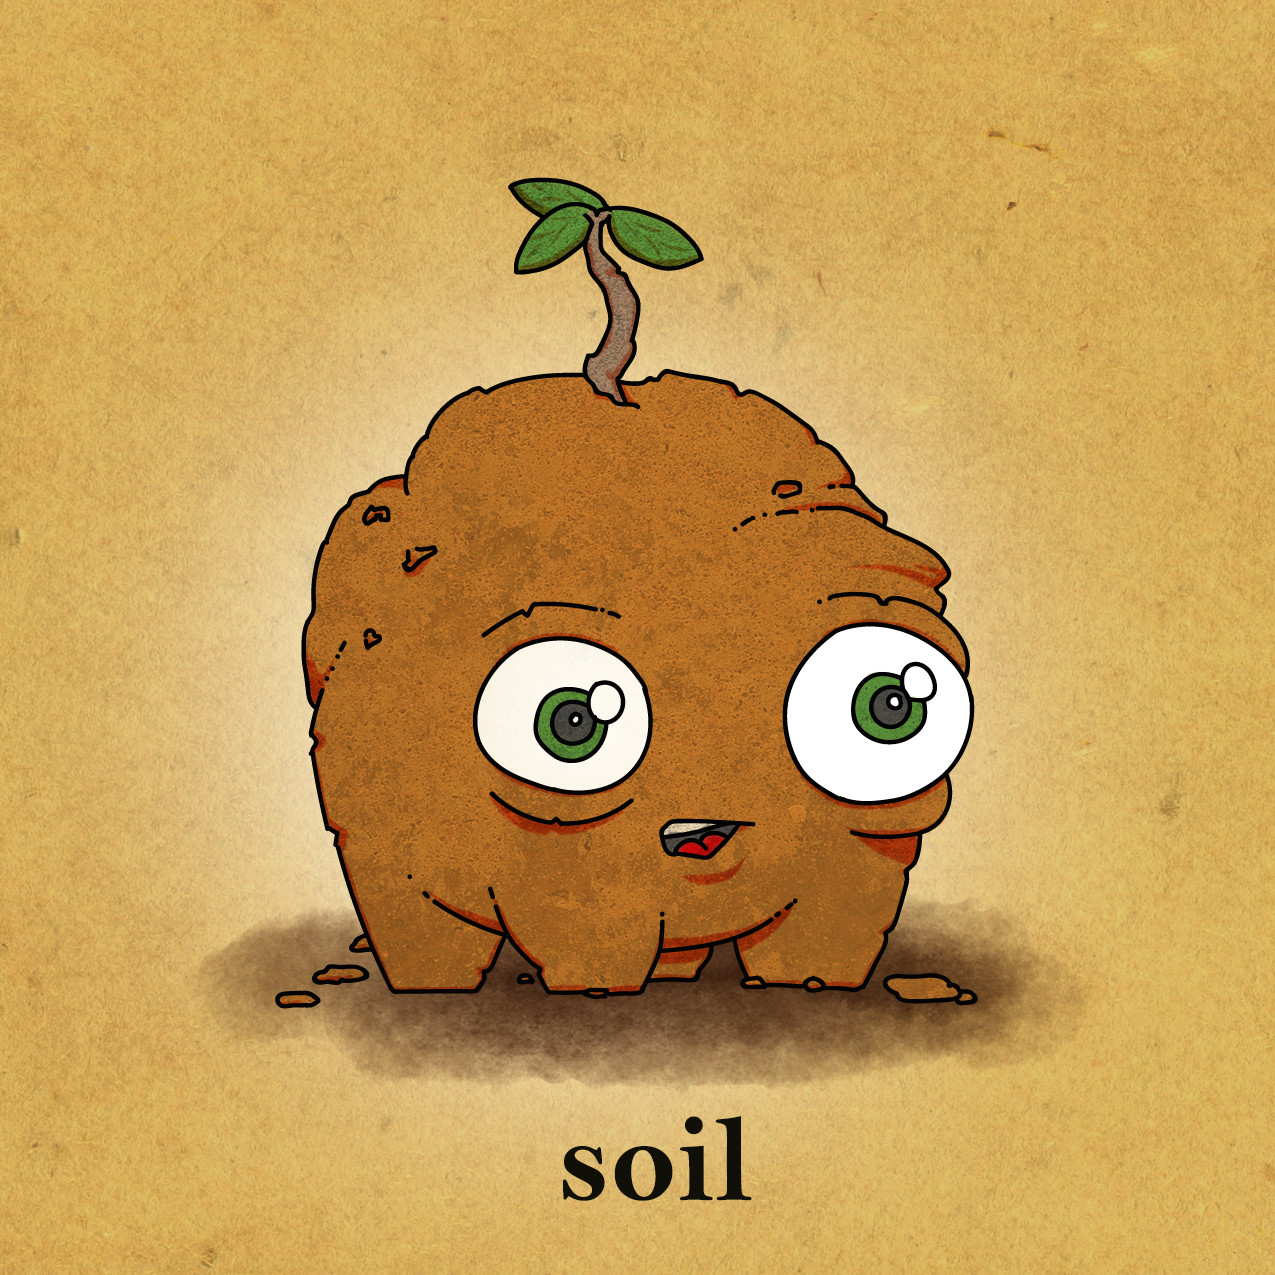 Drawing Science Cartoons Meet soil Education Ecology Garden Earth Cartoon Illustration